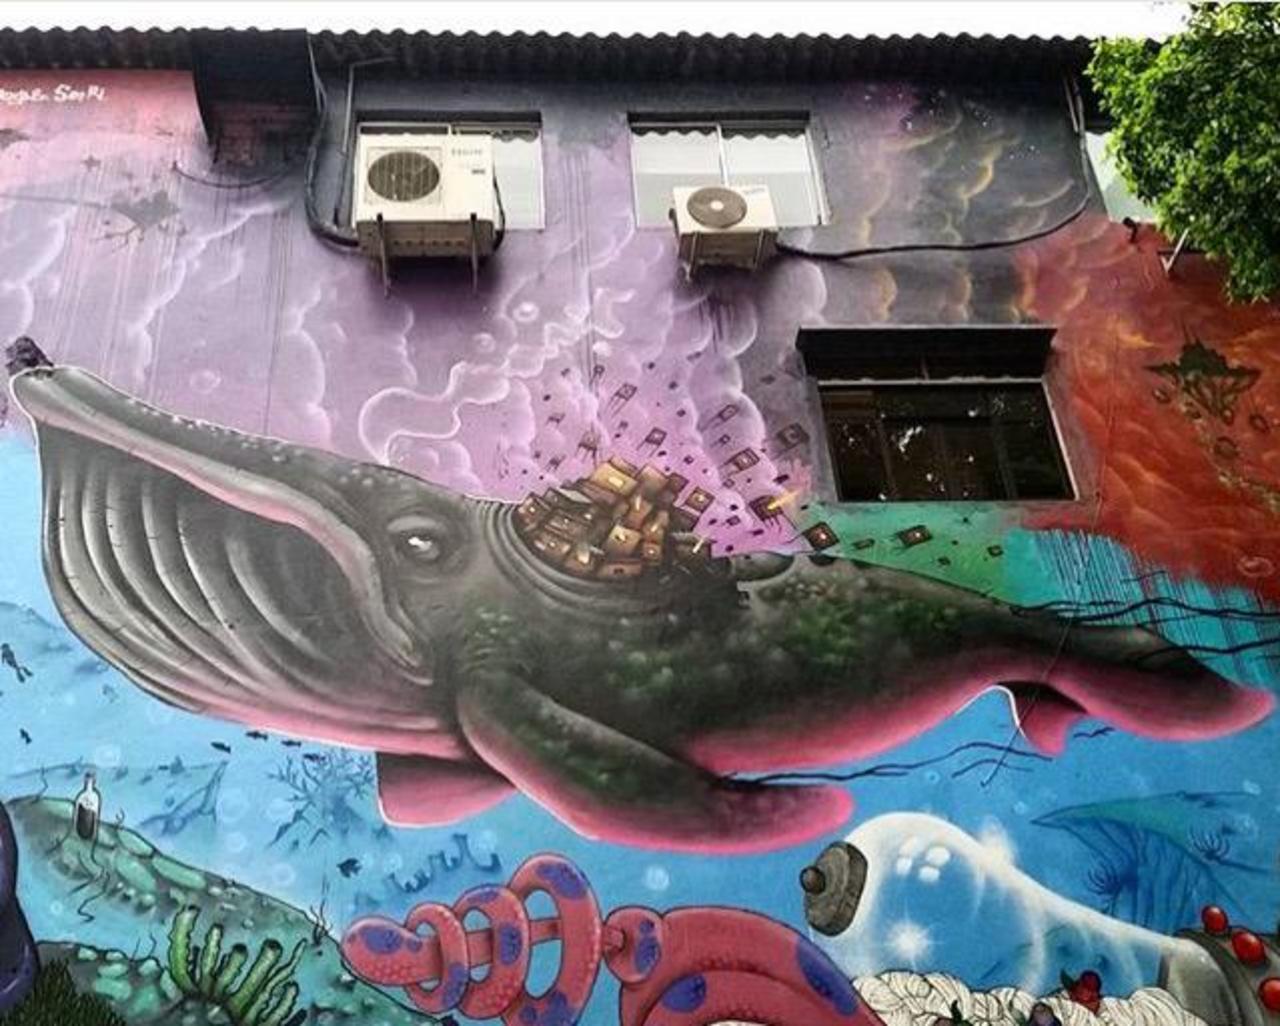 RT @buzz_sandyltn: Street Art by joks_johnes Pinheiros, São Paulo 

#art #mural #graffiti #streetart http://t.co/lI4Ba0m6Pl